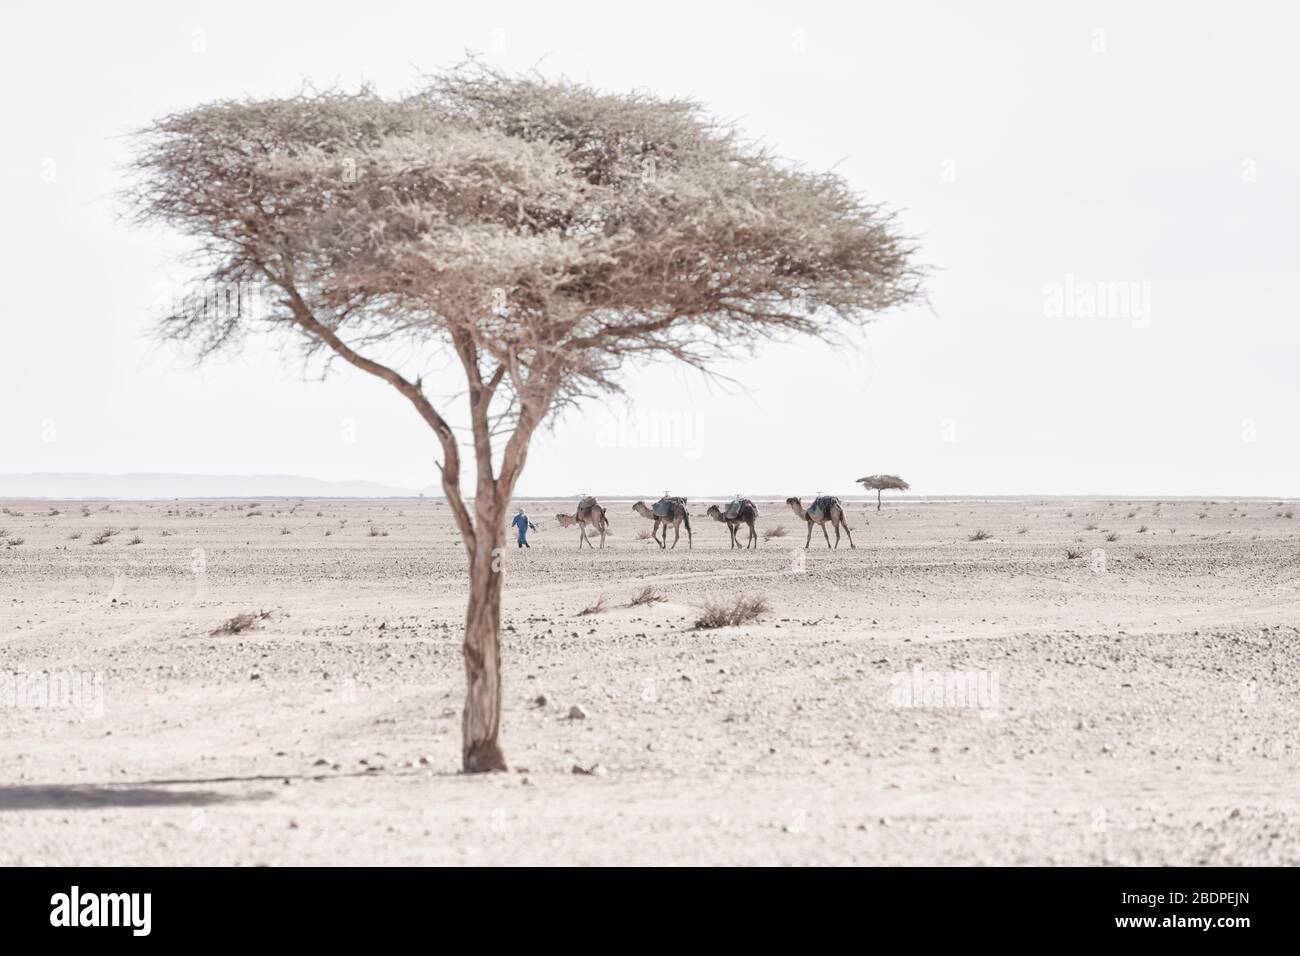 Nomad with camels (dromedary). Barren, arid, stone desert with Acacia trees. Mhamid, Sahara desert, Morocco. Stock Photo